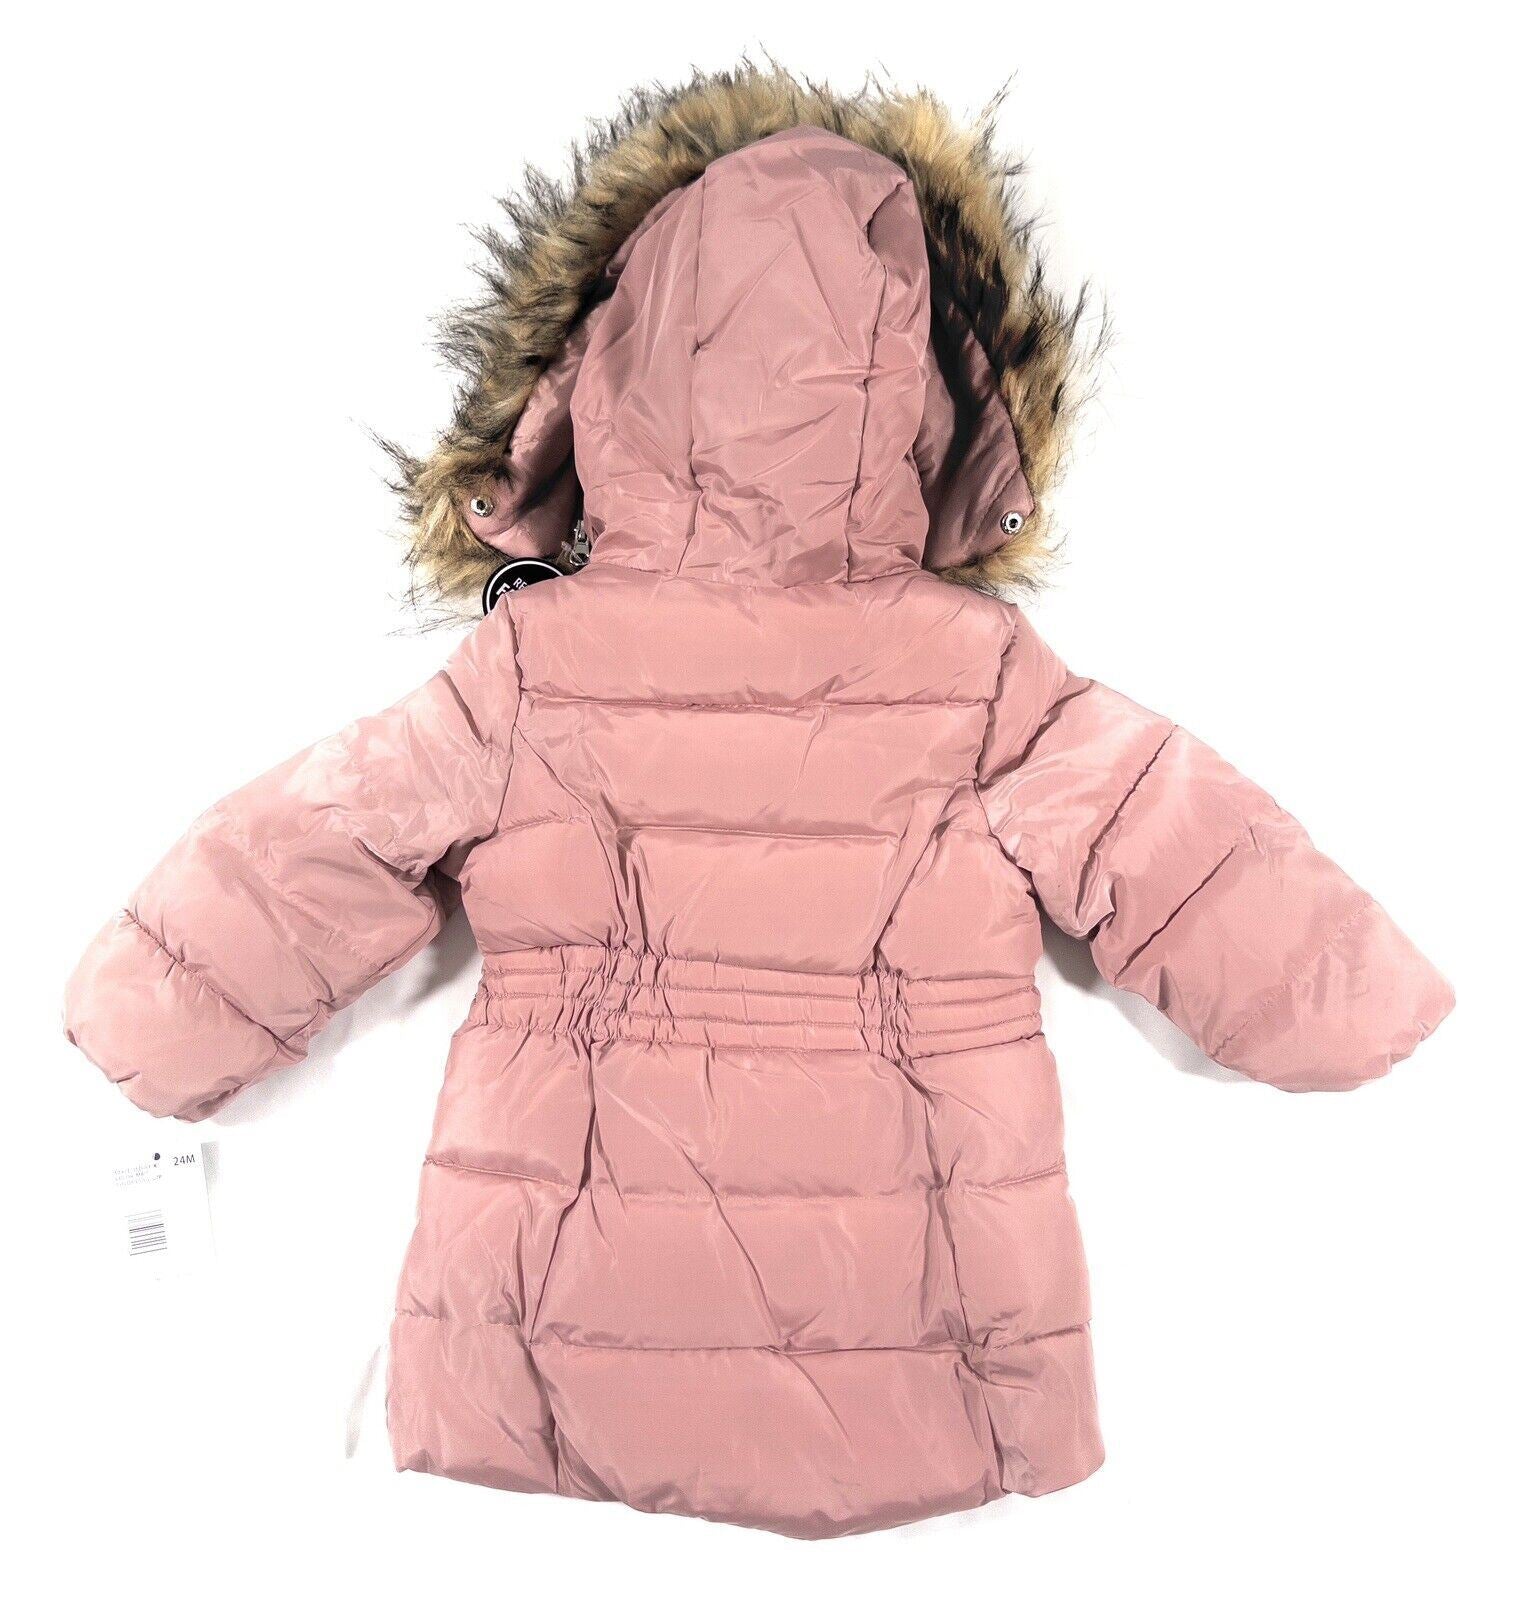 DKNY JEANS Infant Girls Pink Mid Length Coat Hooded Size UK 24 Months